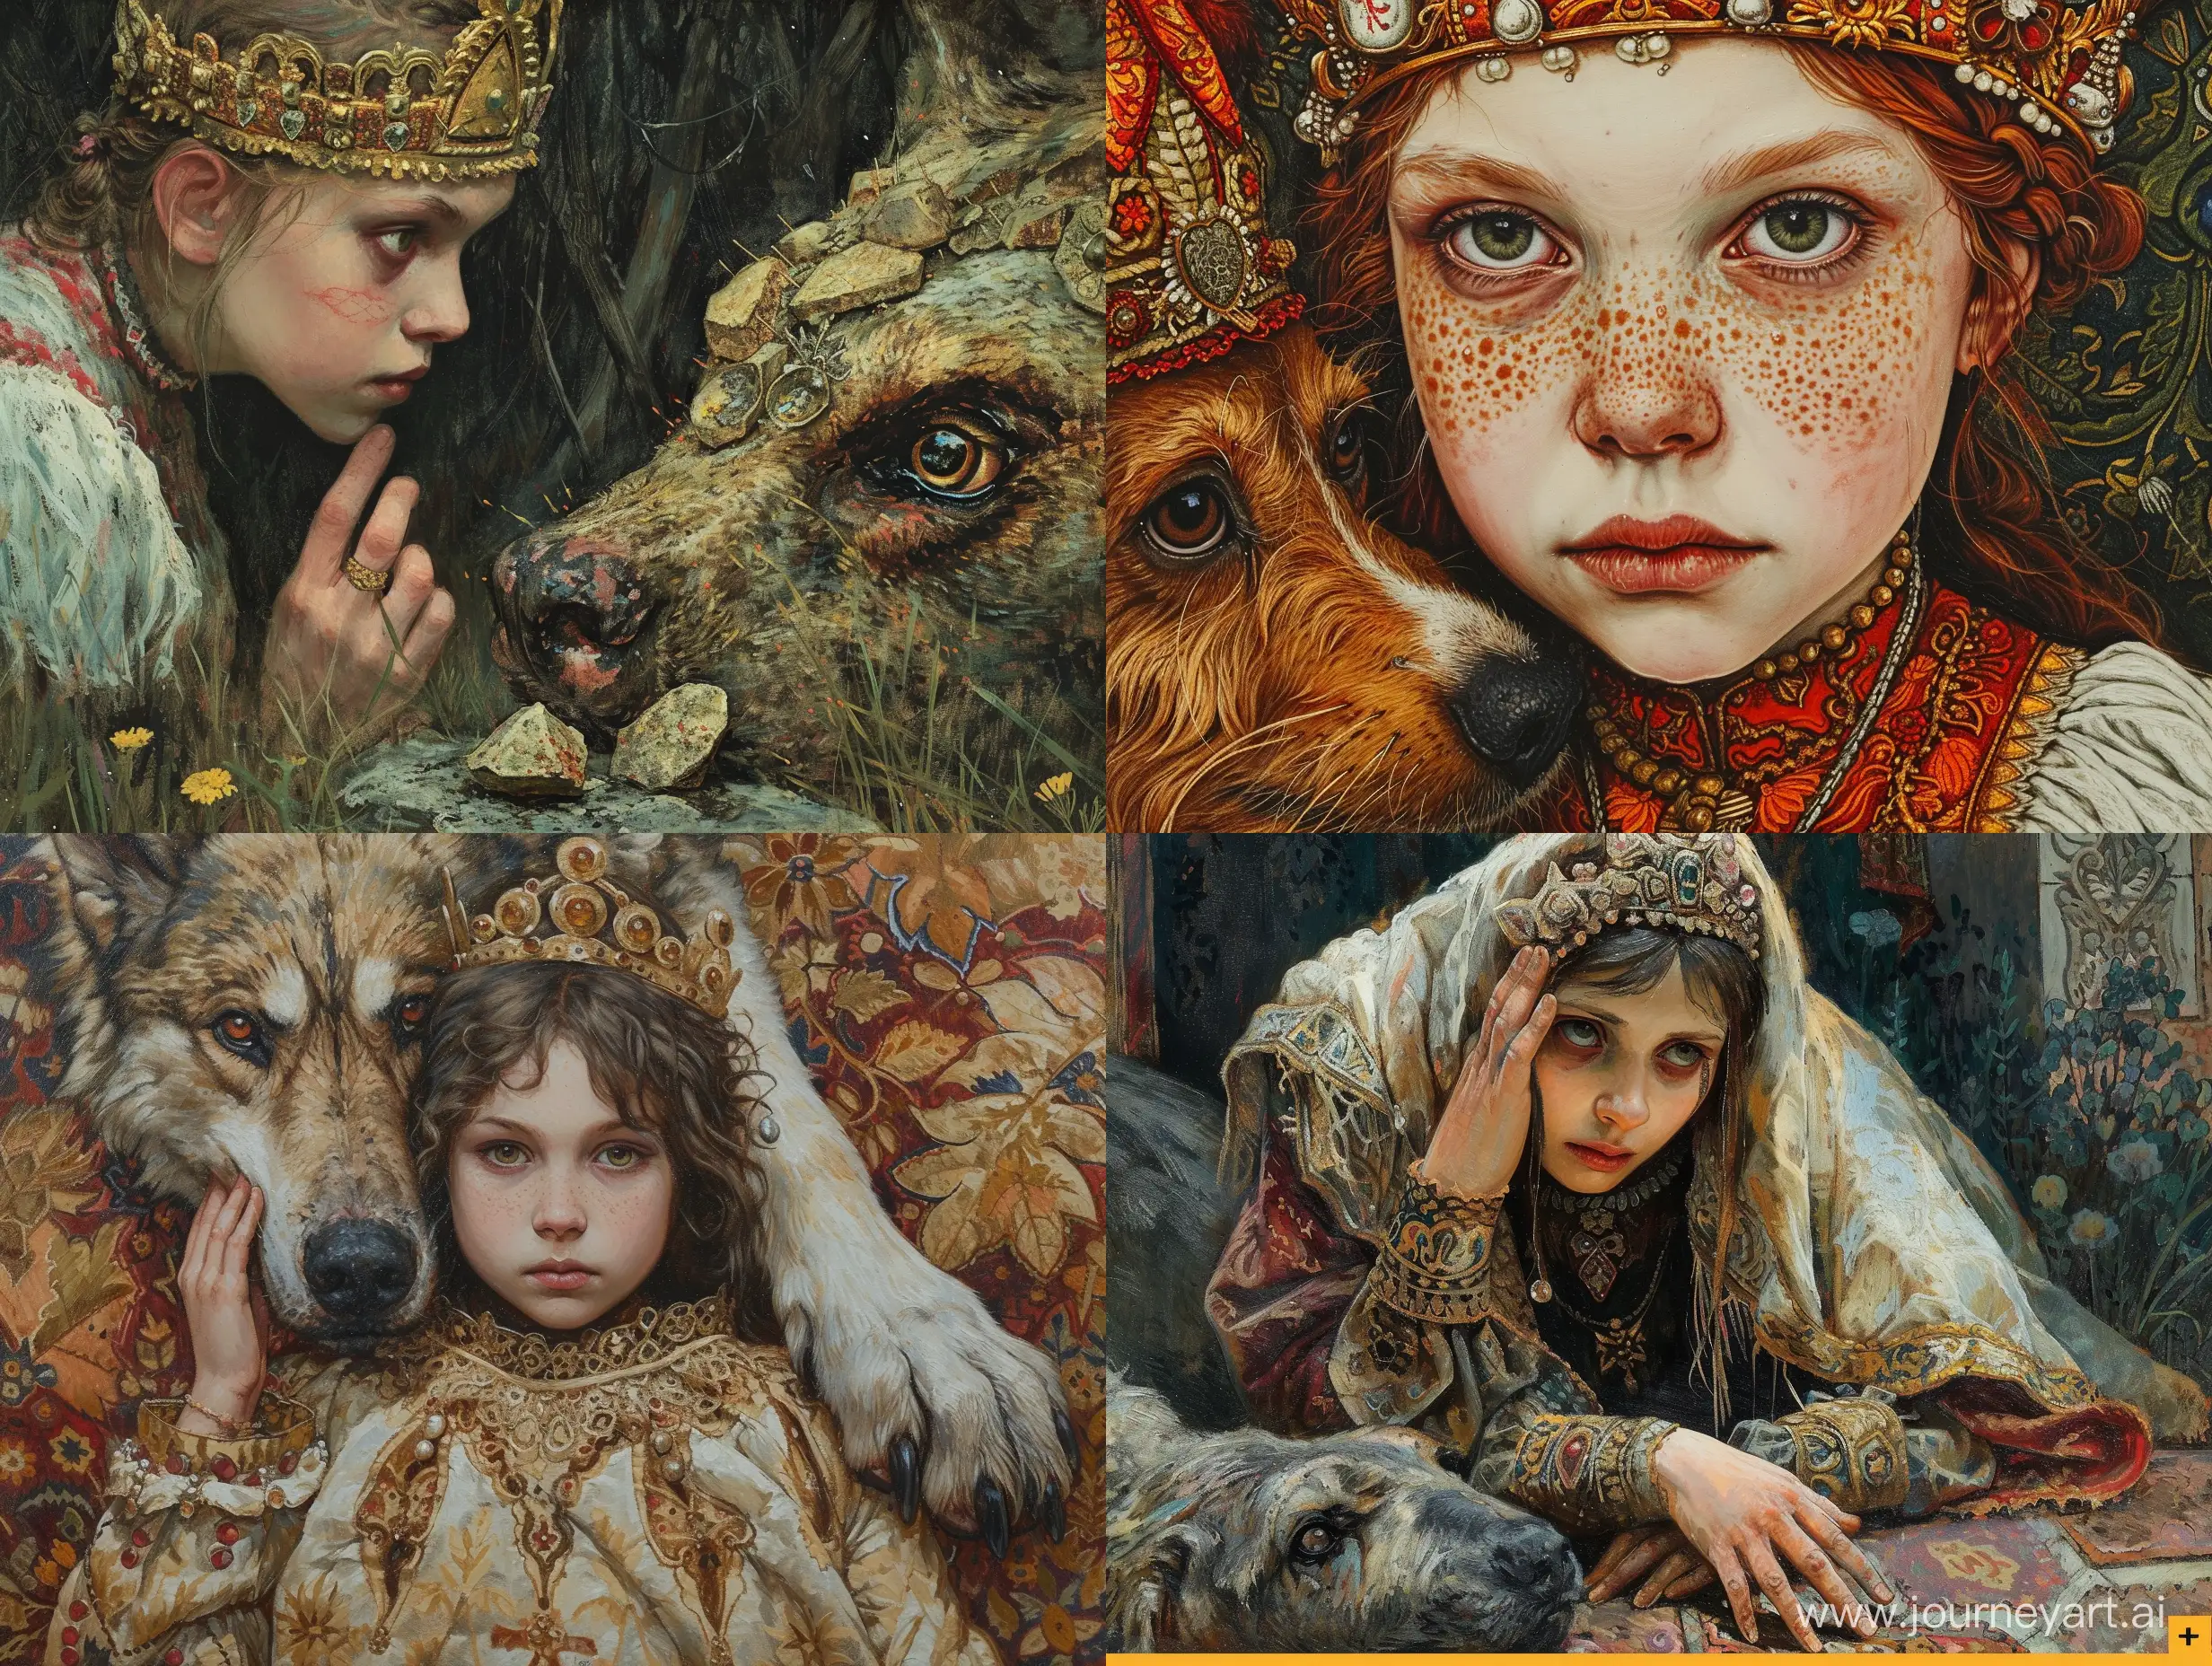 Young-Girl-Leaving-Half-the-Kingdom-Symbolic-Russian-Folk-Style-Art